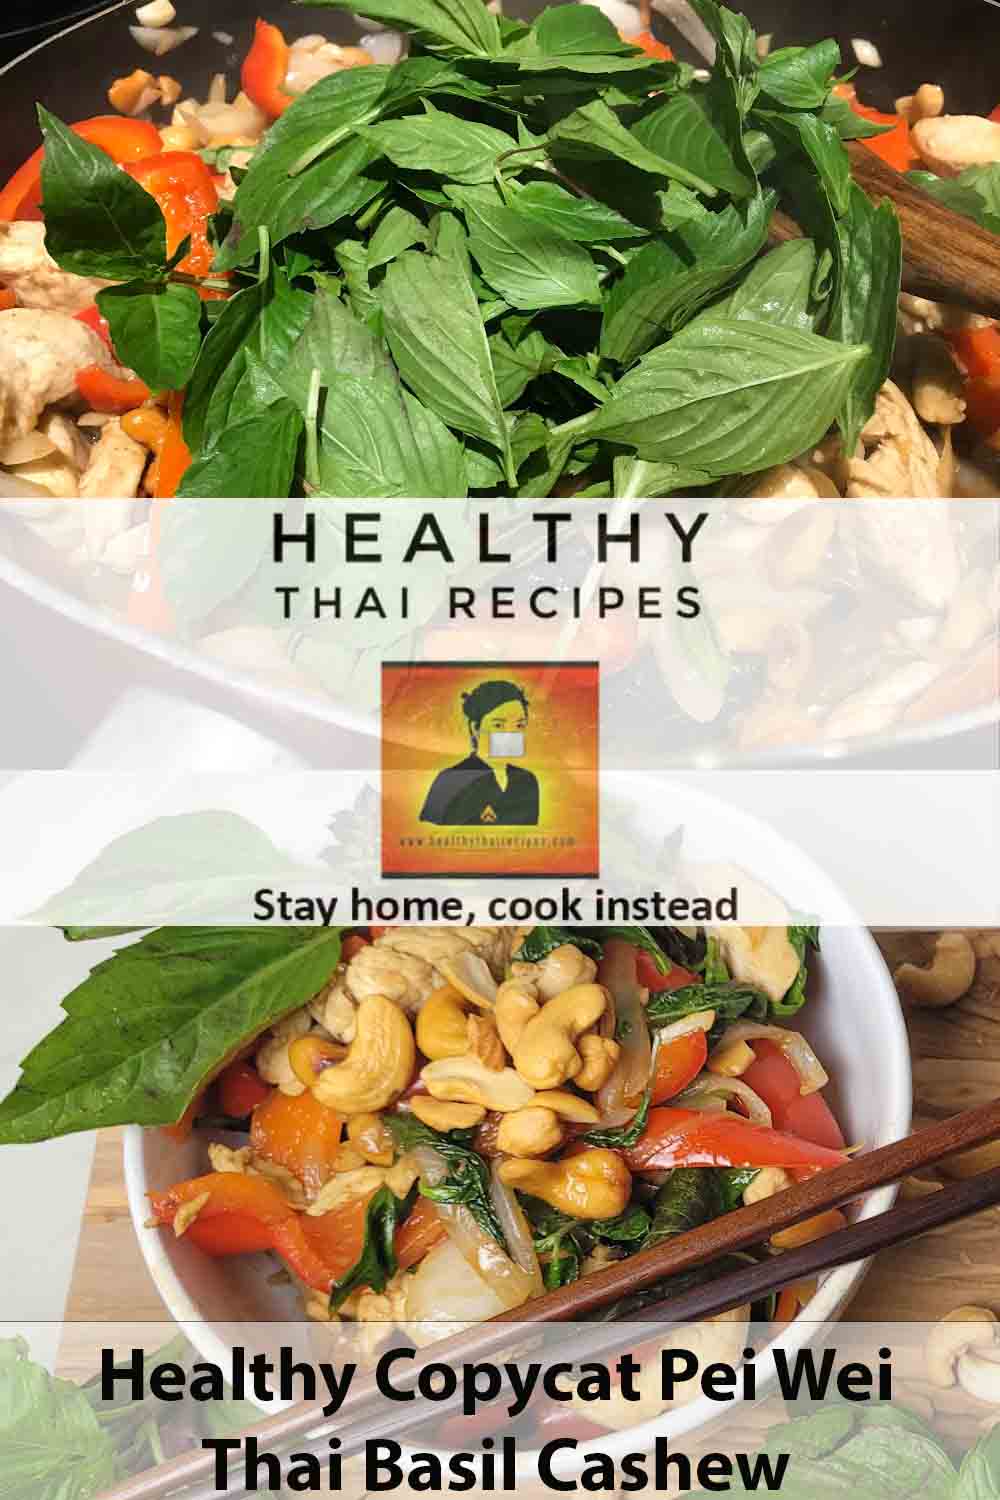 Healthy Copycat Pei Wei สูตรไก่เม็ดมะม่วงหิมพานต์ไทย Pinterest Image